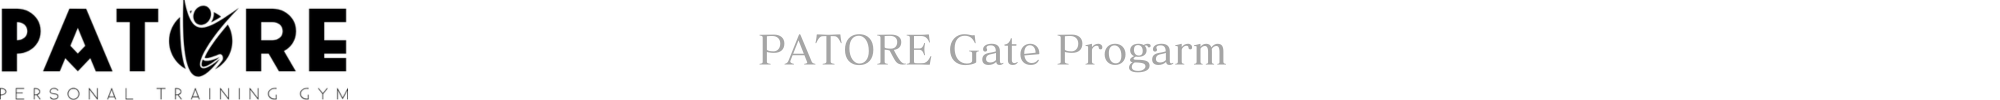 PATORE Gate Program